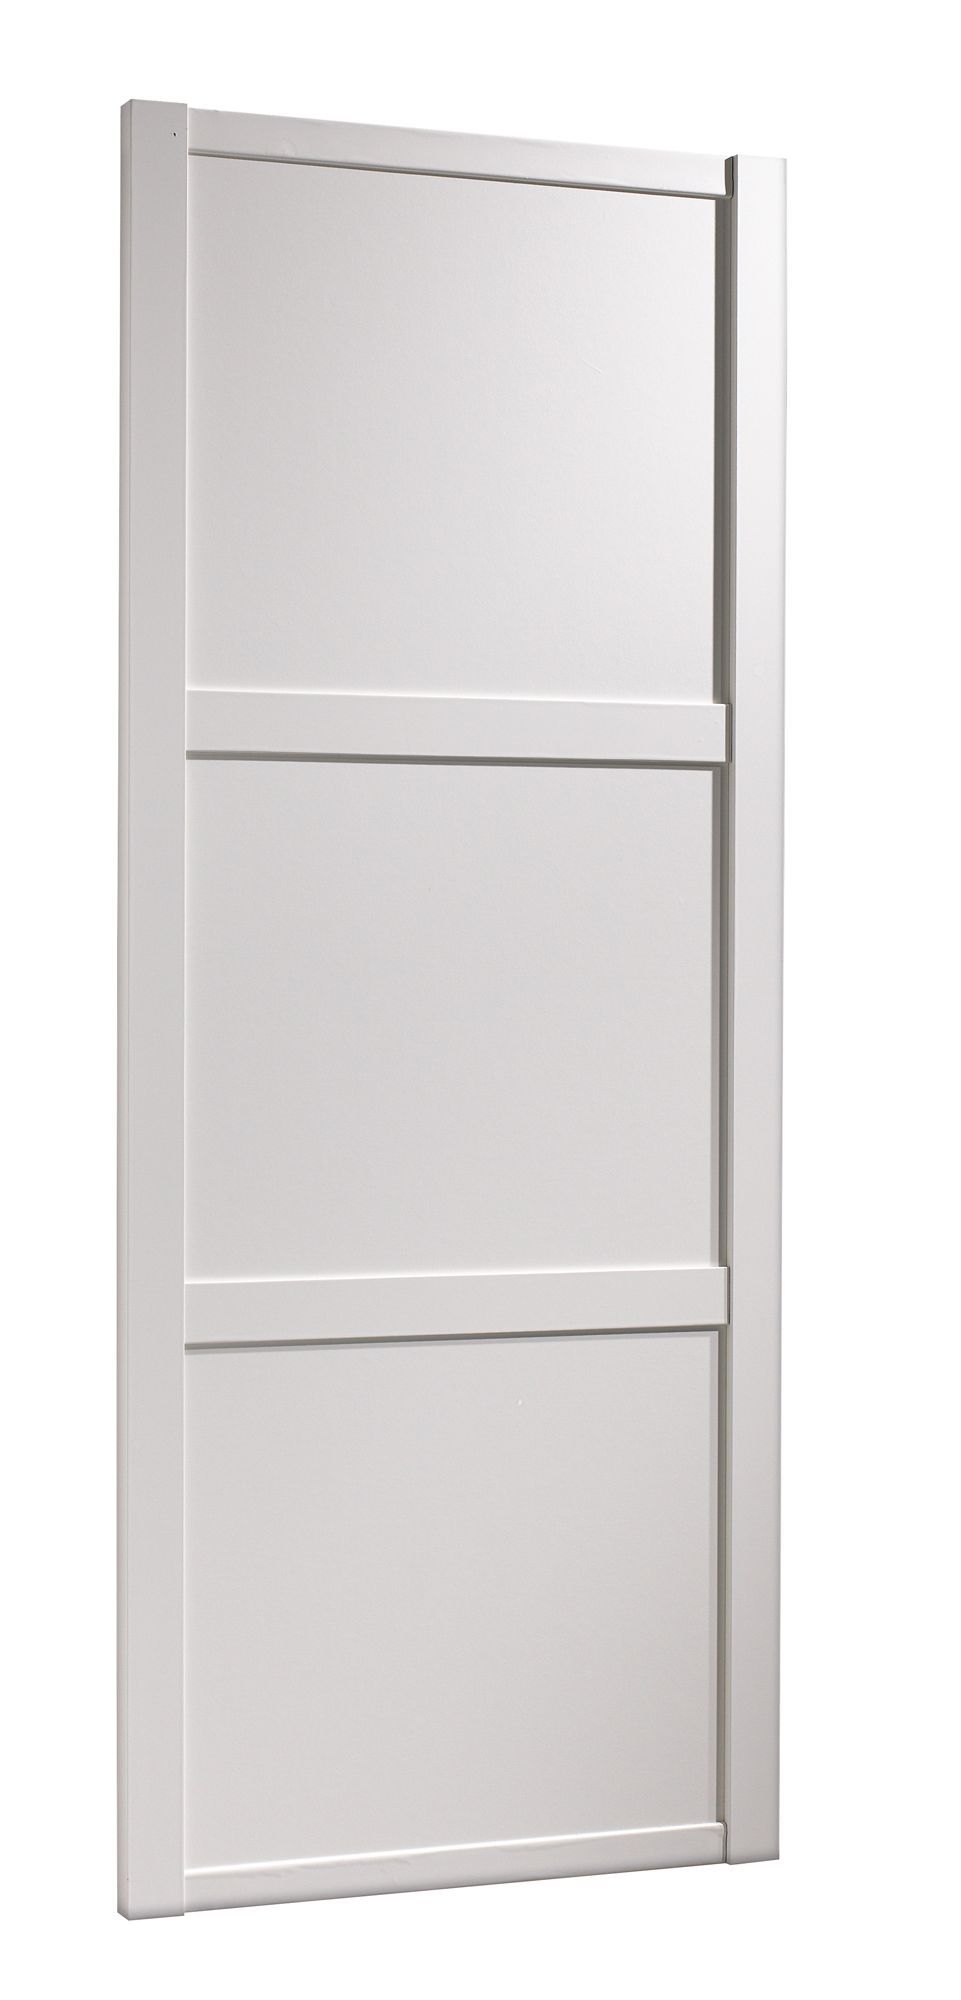 Spacepro Classic Shaker White Sliding wardrobe door (H) 2220mm x (W) 914mm